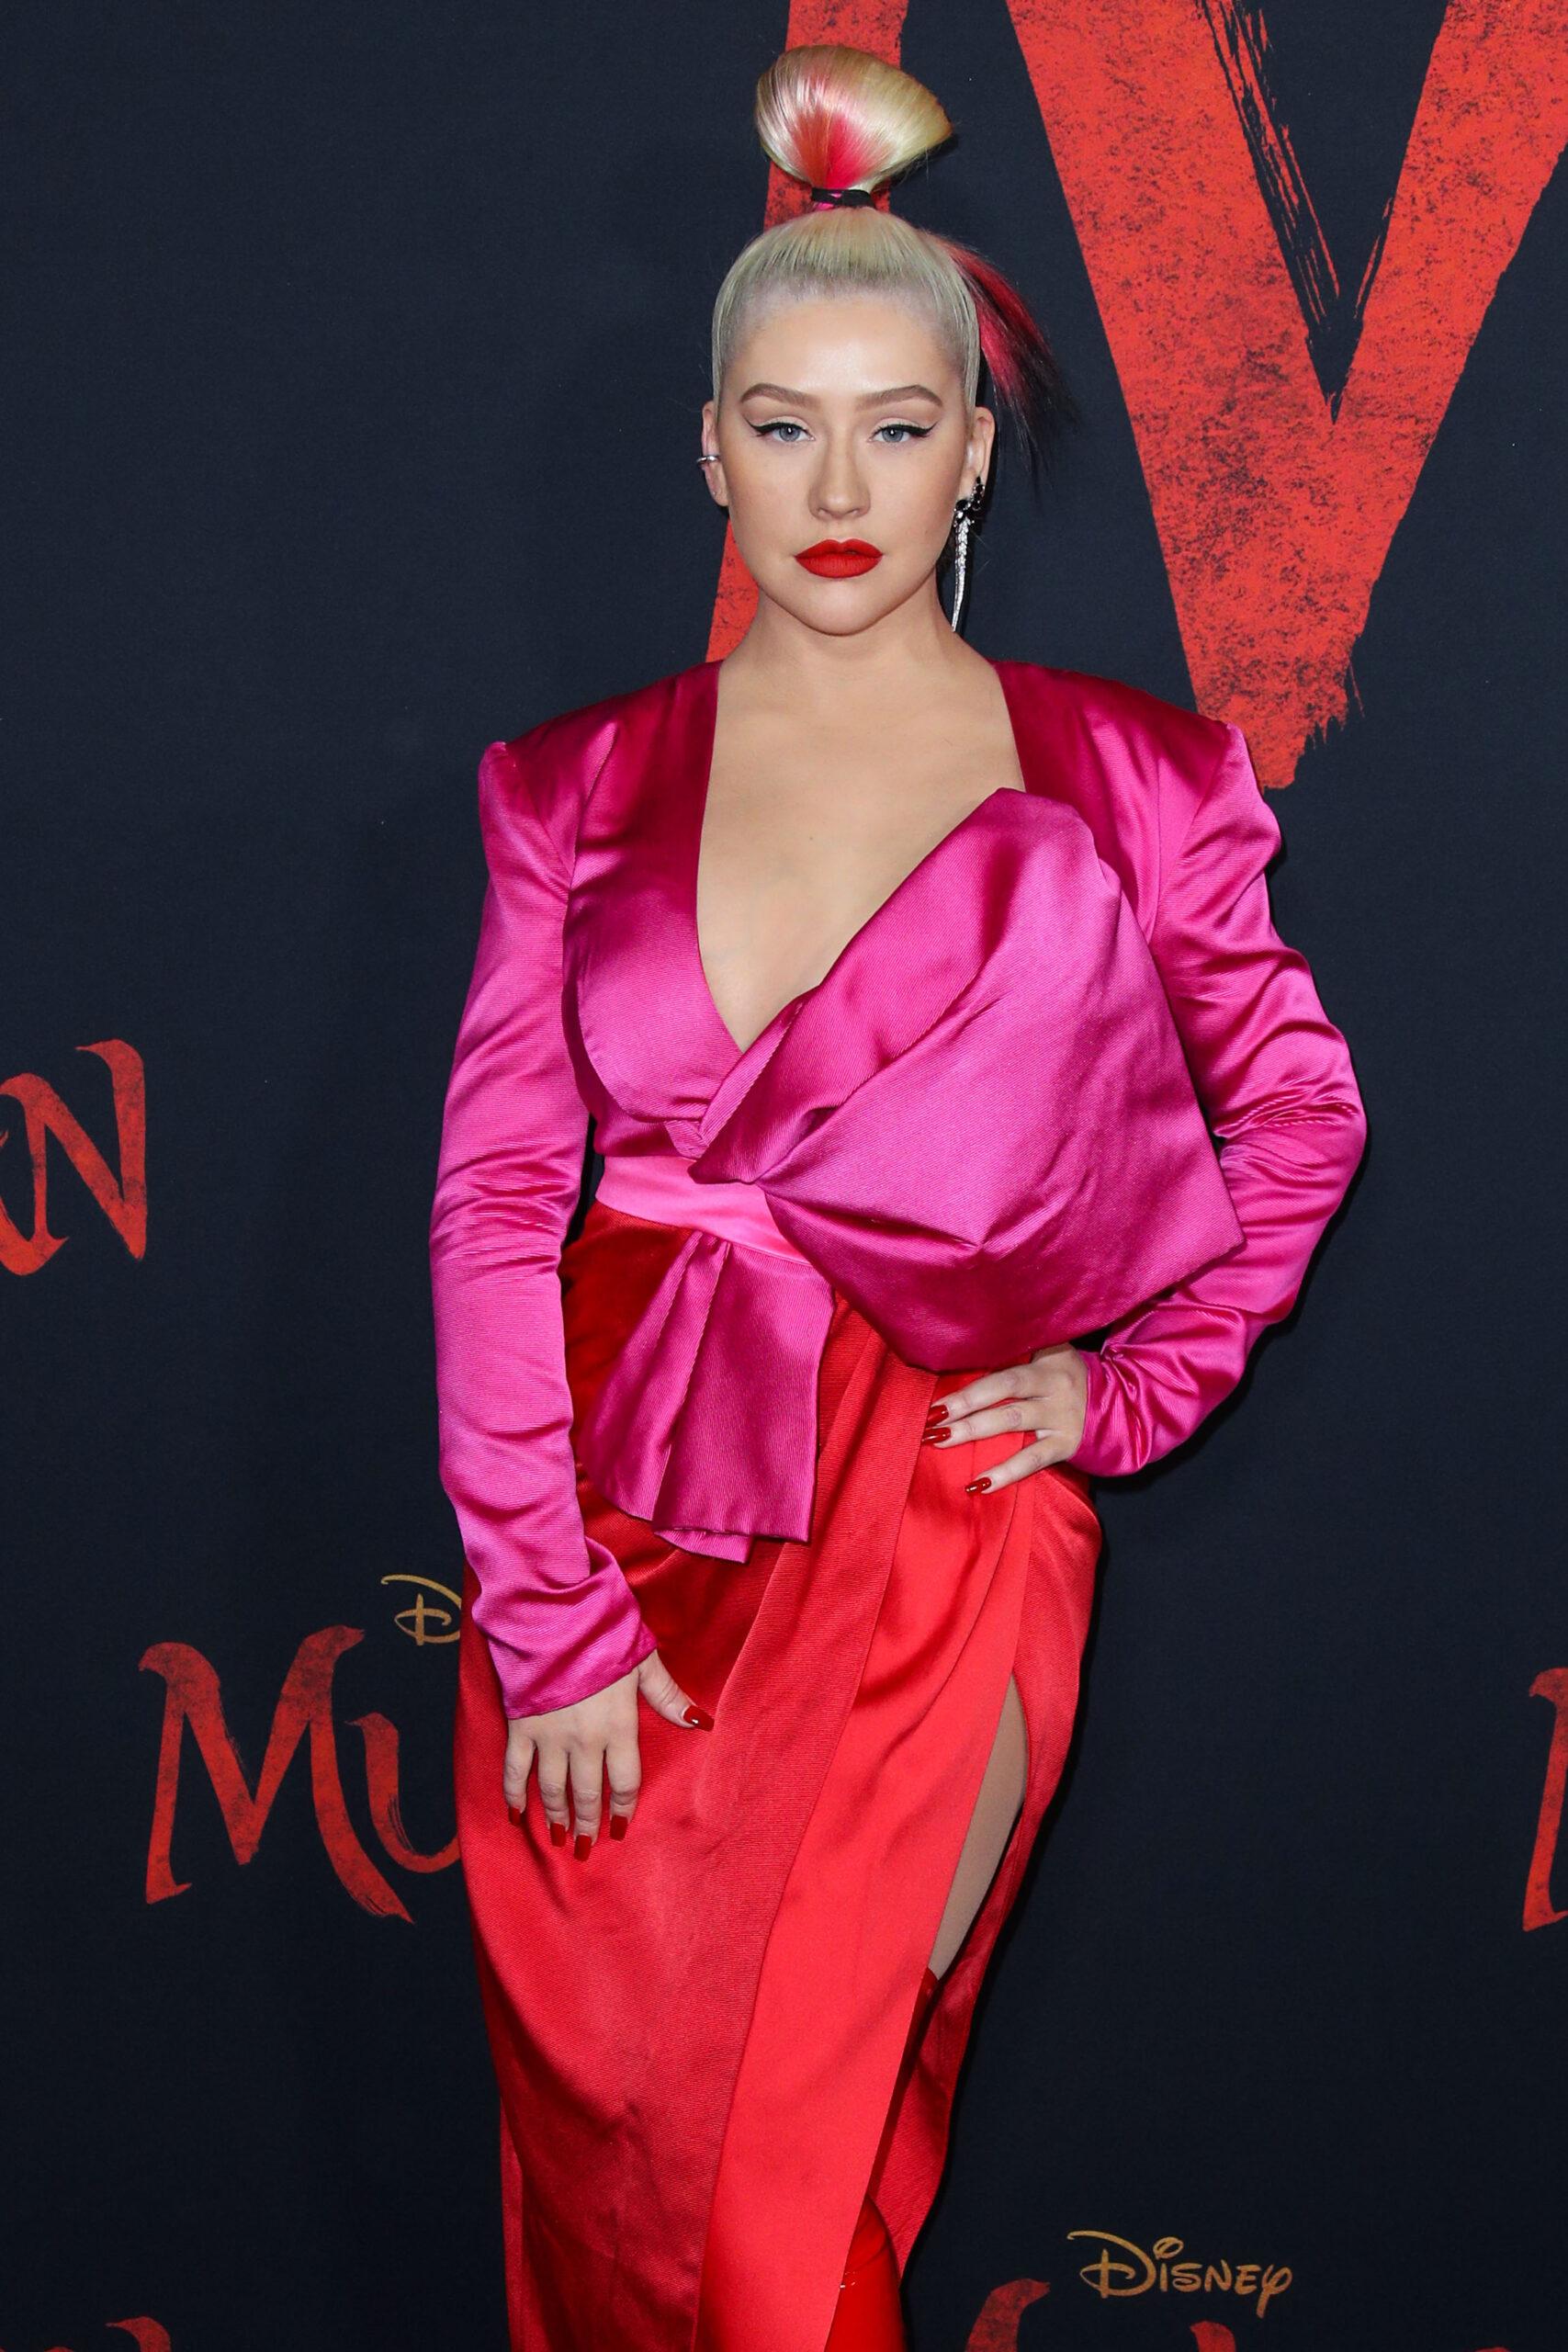 Christina Aguilera Wearing A Galia Lahav Dress Arrives At The World Premiere Of Disney's 'Mulan'